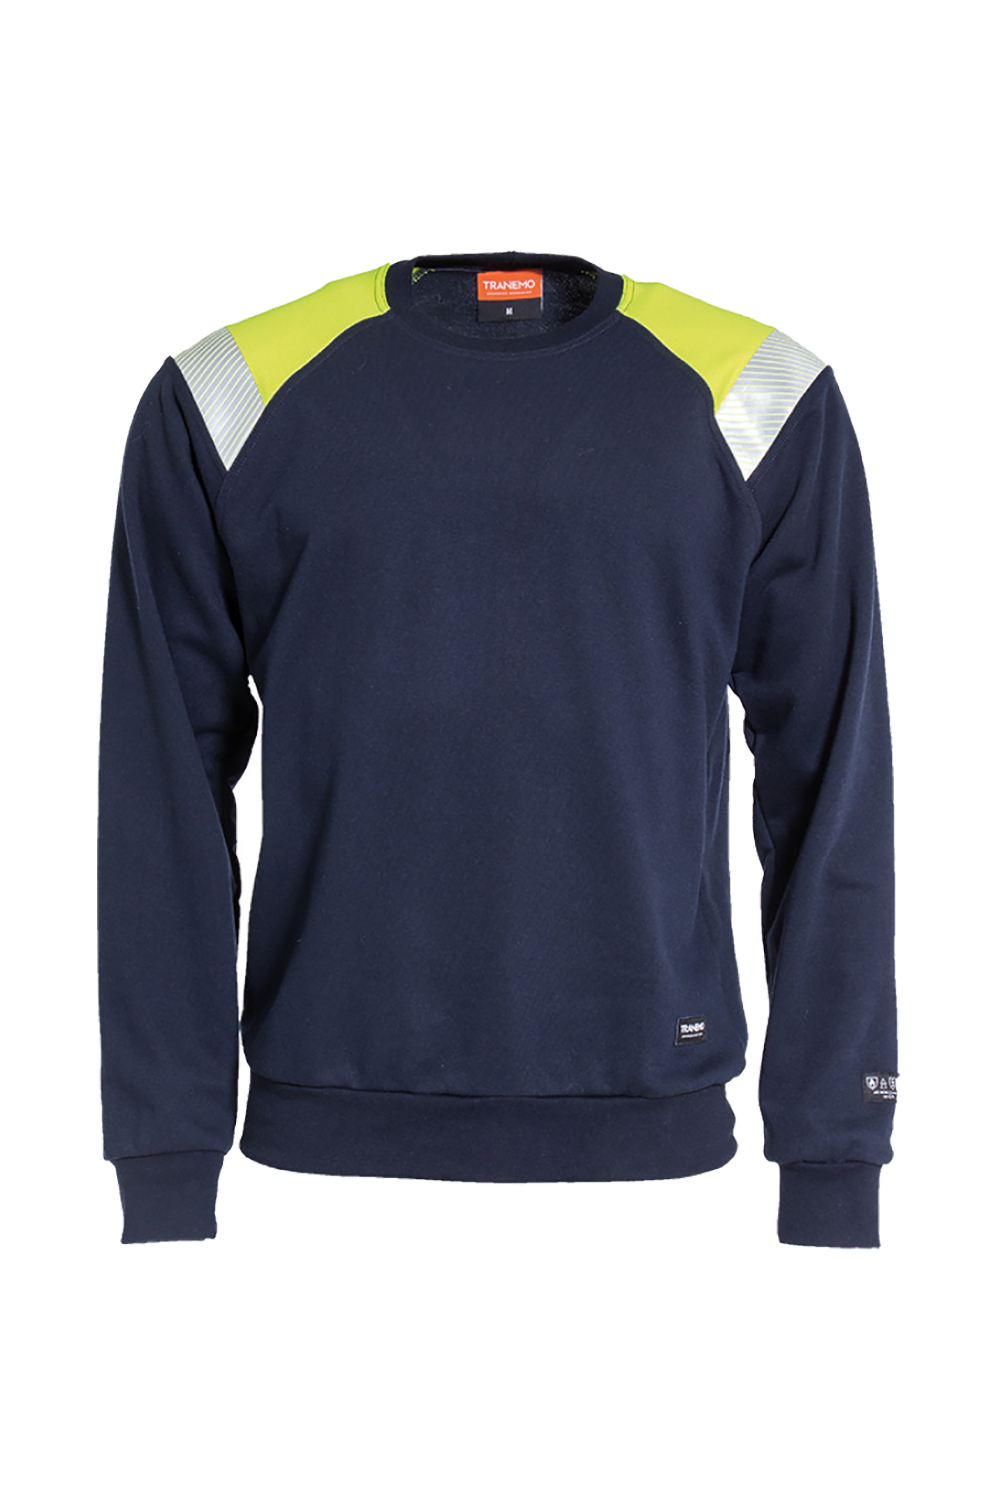 FR Sweatshirt 6375 89 / Tranemo / İş Kıyafetleri